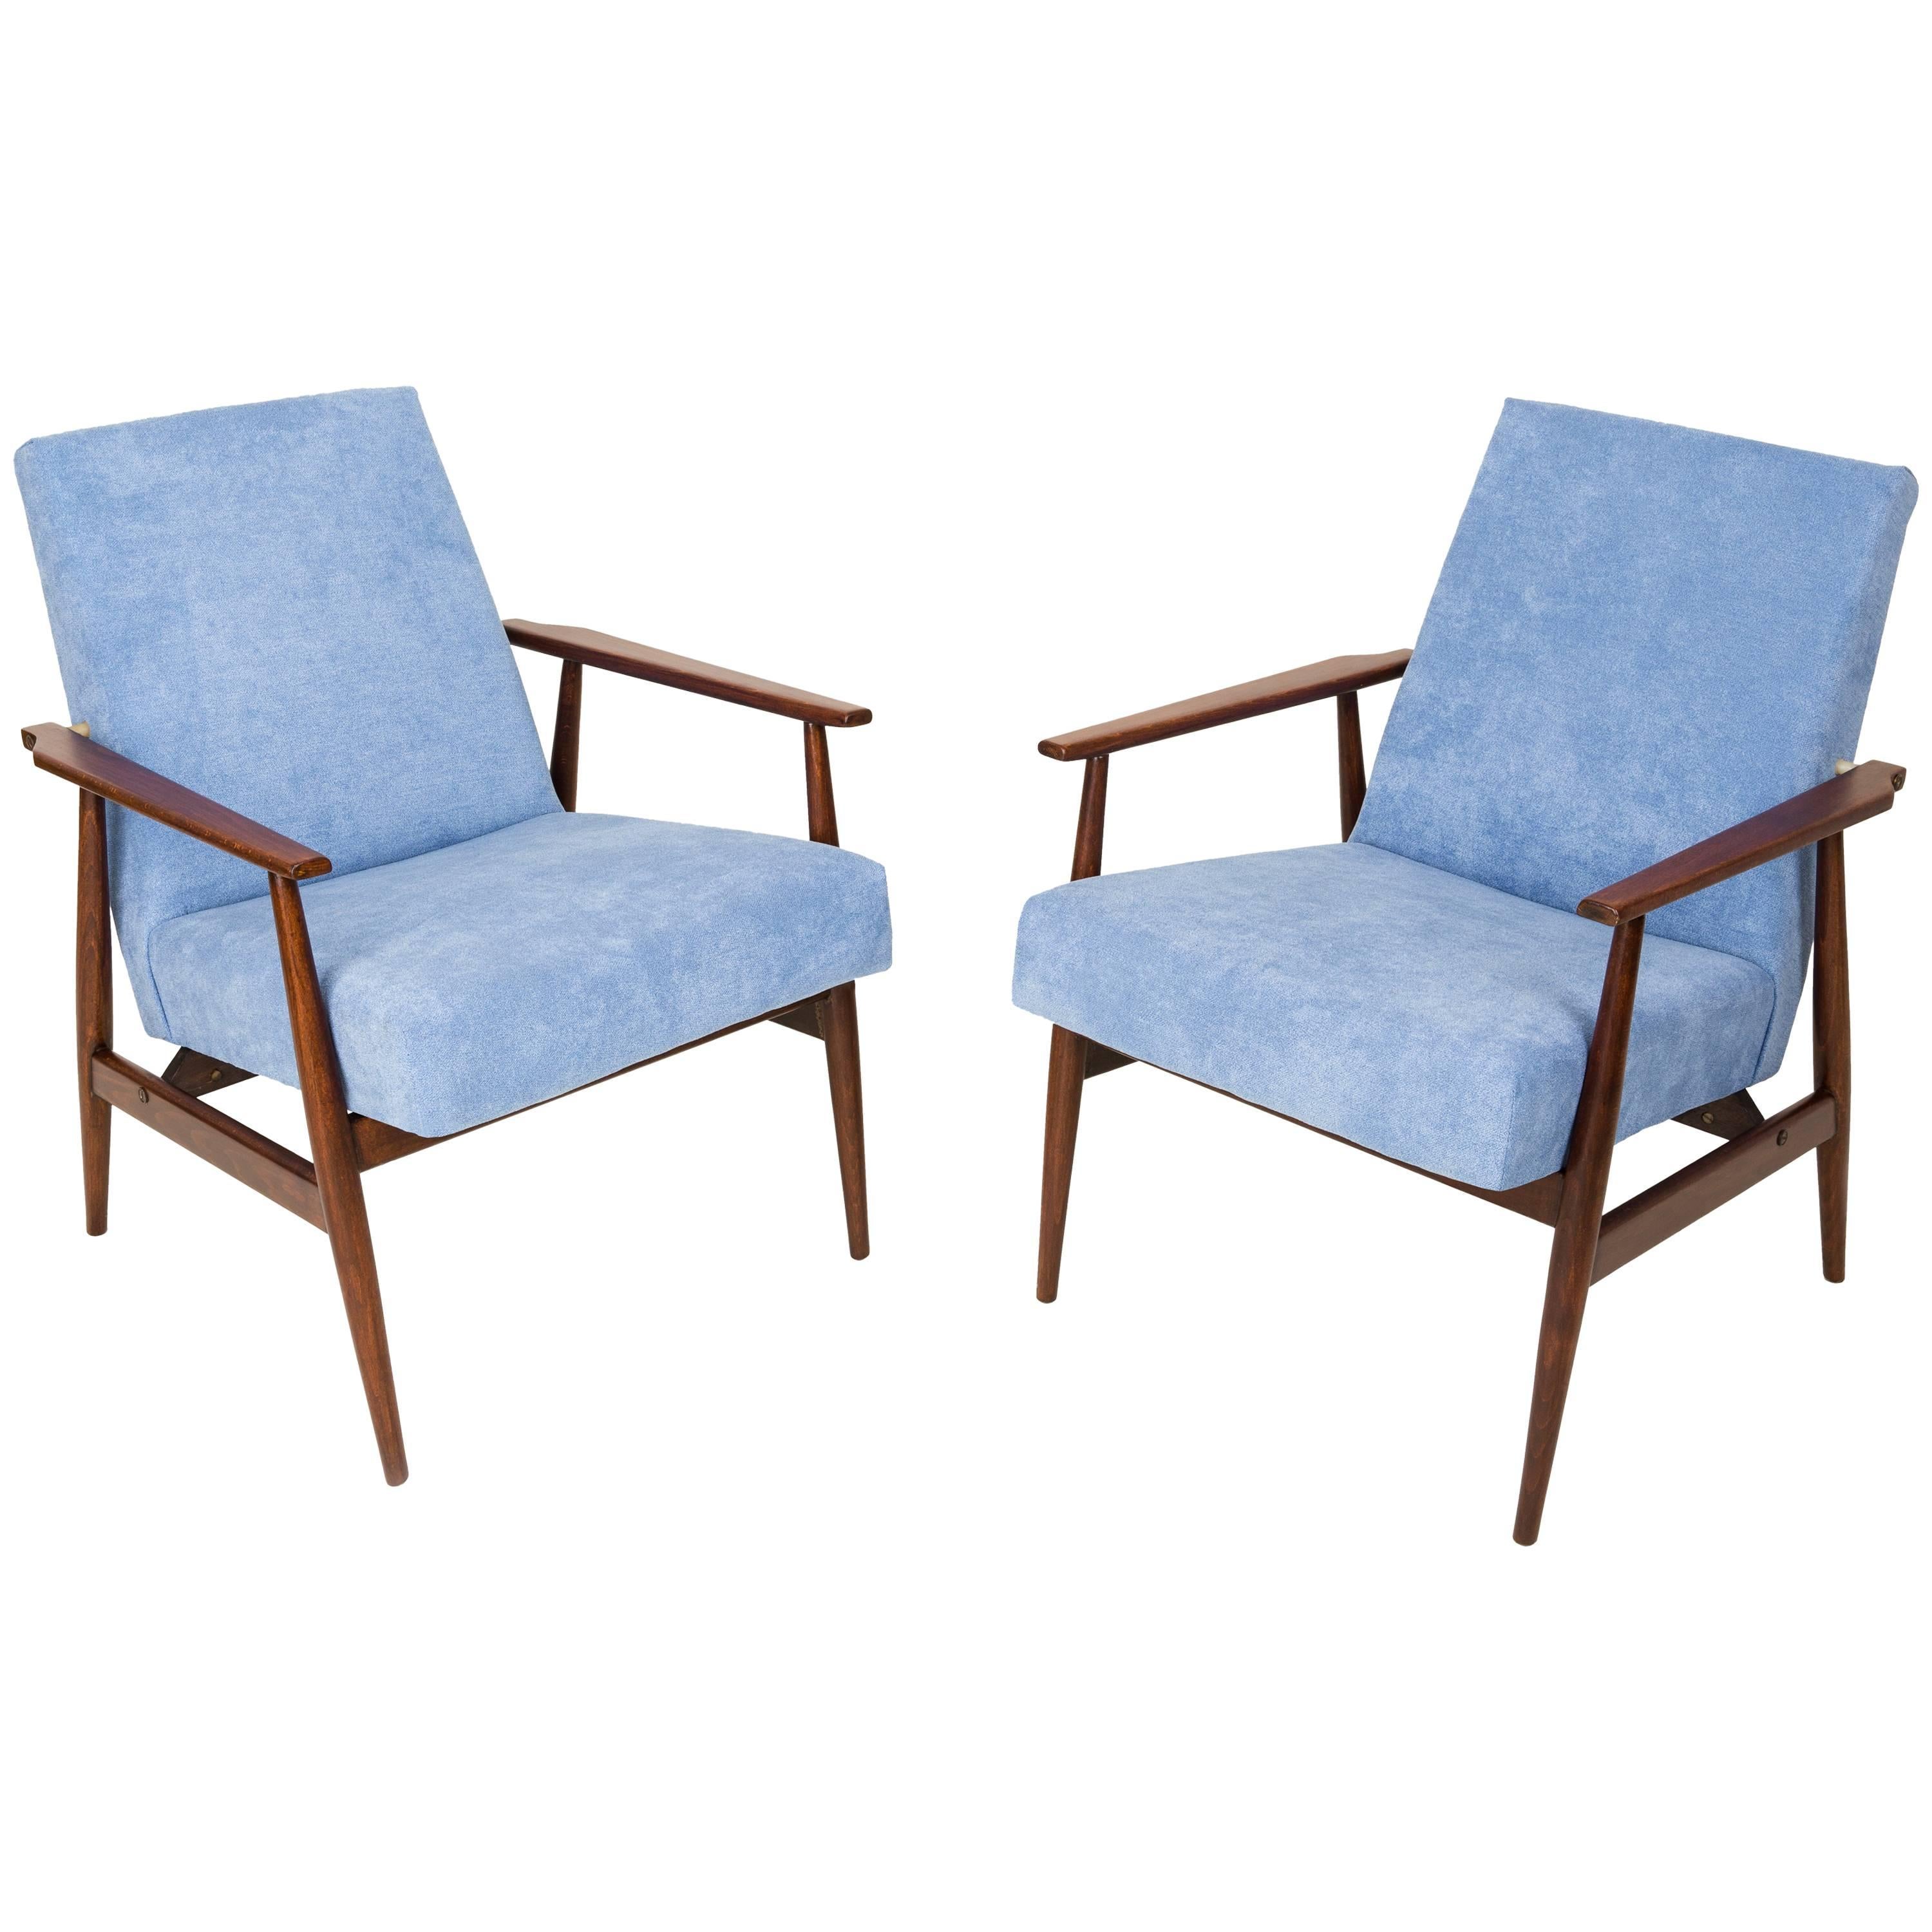 Paar babyblaue Dante-Sessel des 20. Jahrhunderts, H. Lis, 1960er Jahre